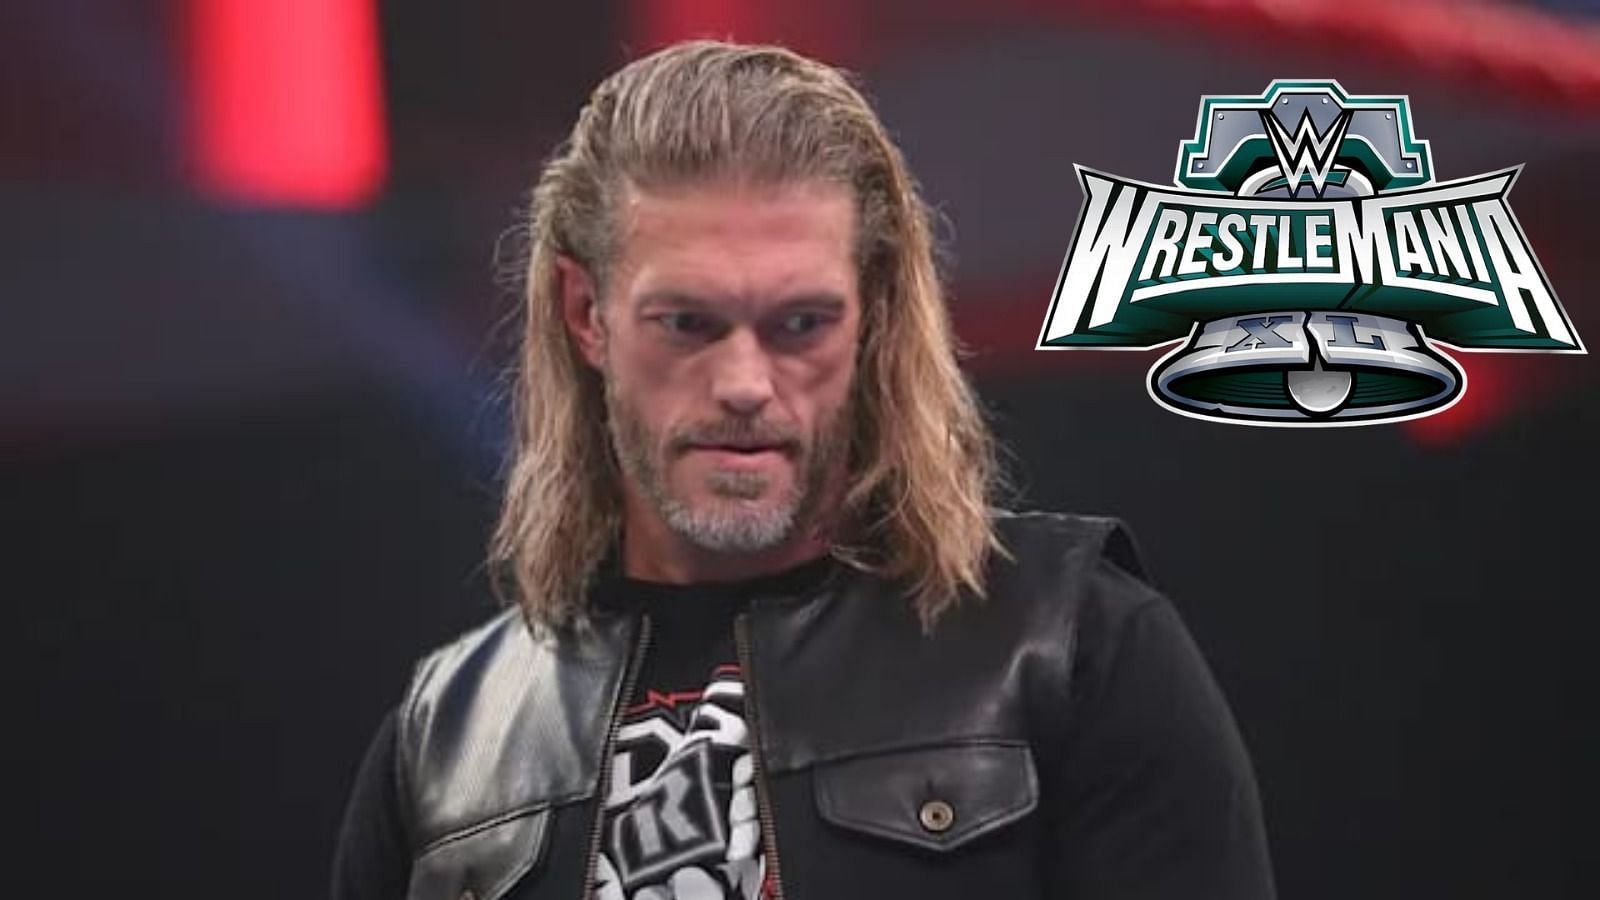 Edge returned to WWE at Royal Rumble 2020